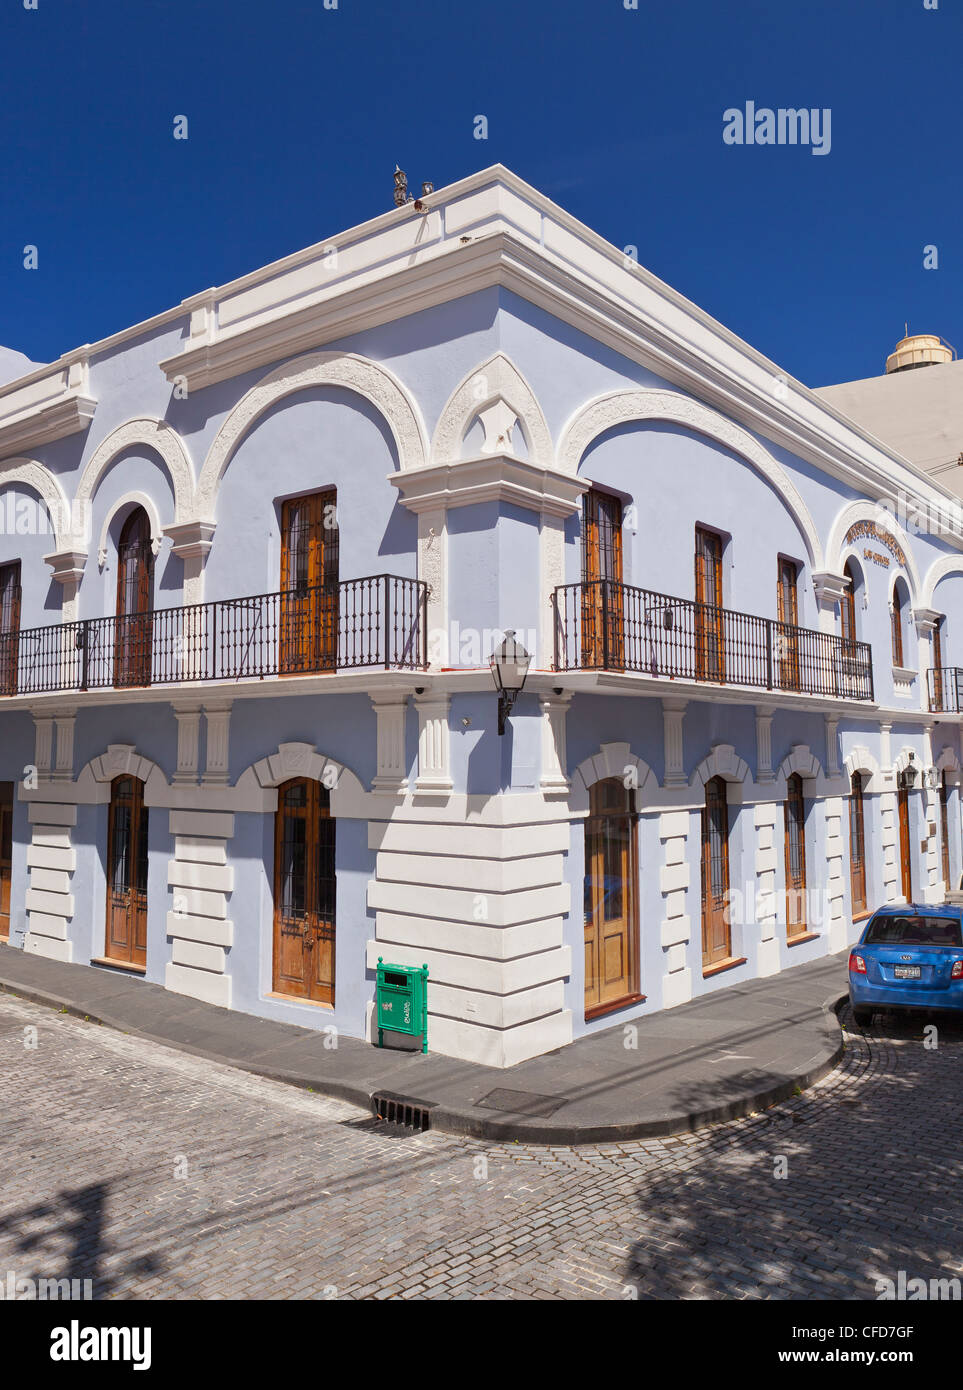 OLD SAN JUAN, PUERTO RICO - Historic building with balconies on Calle de Tetuan. Stock Photo